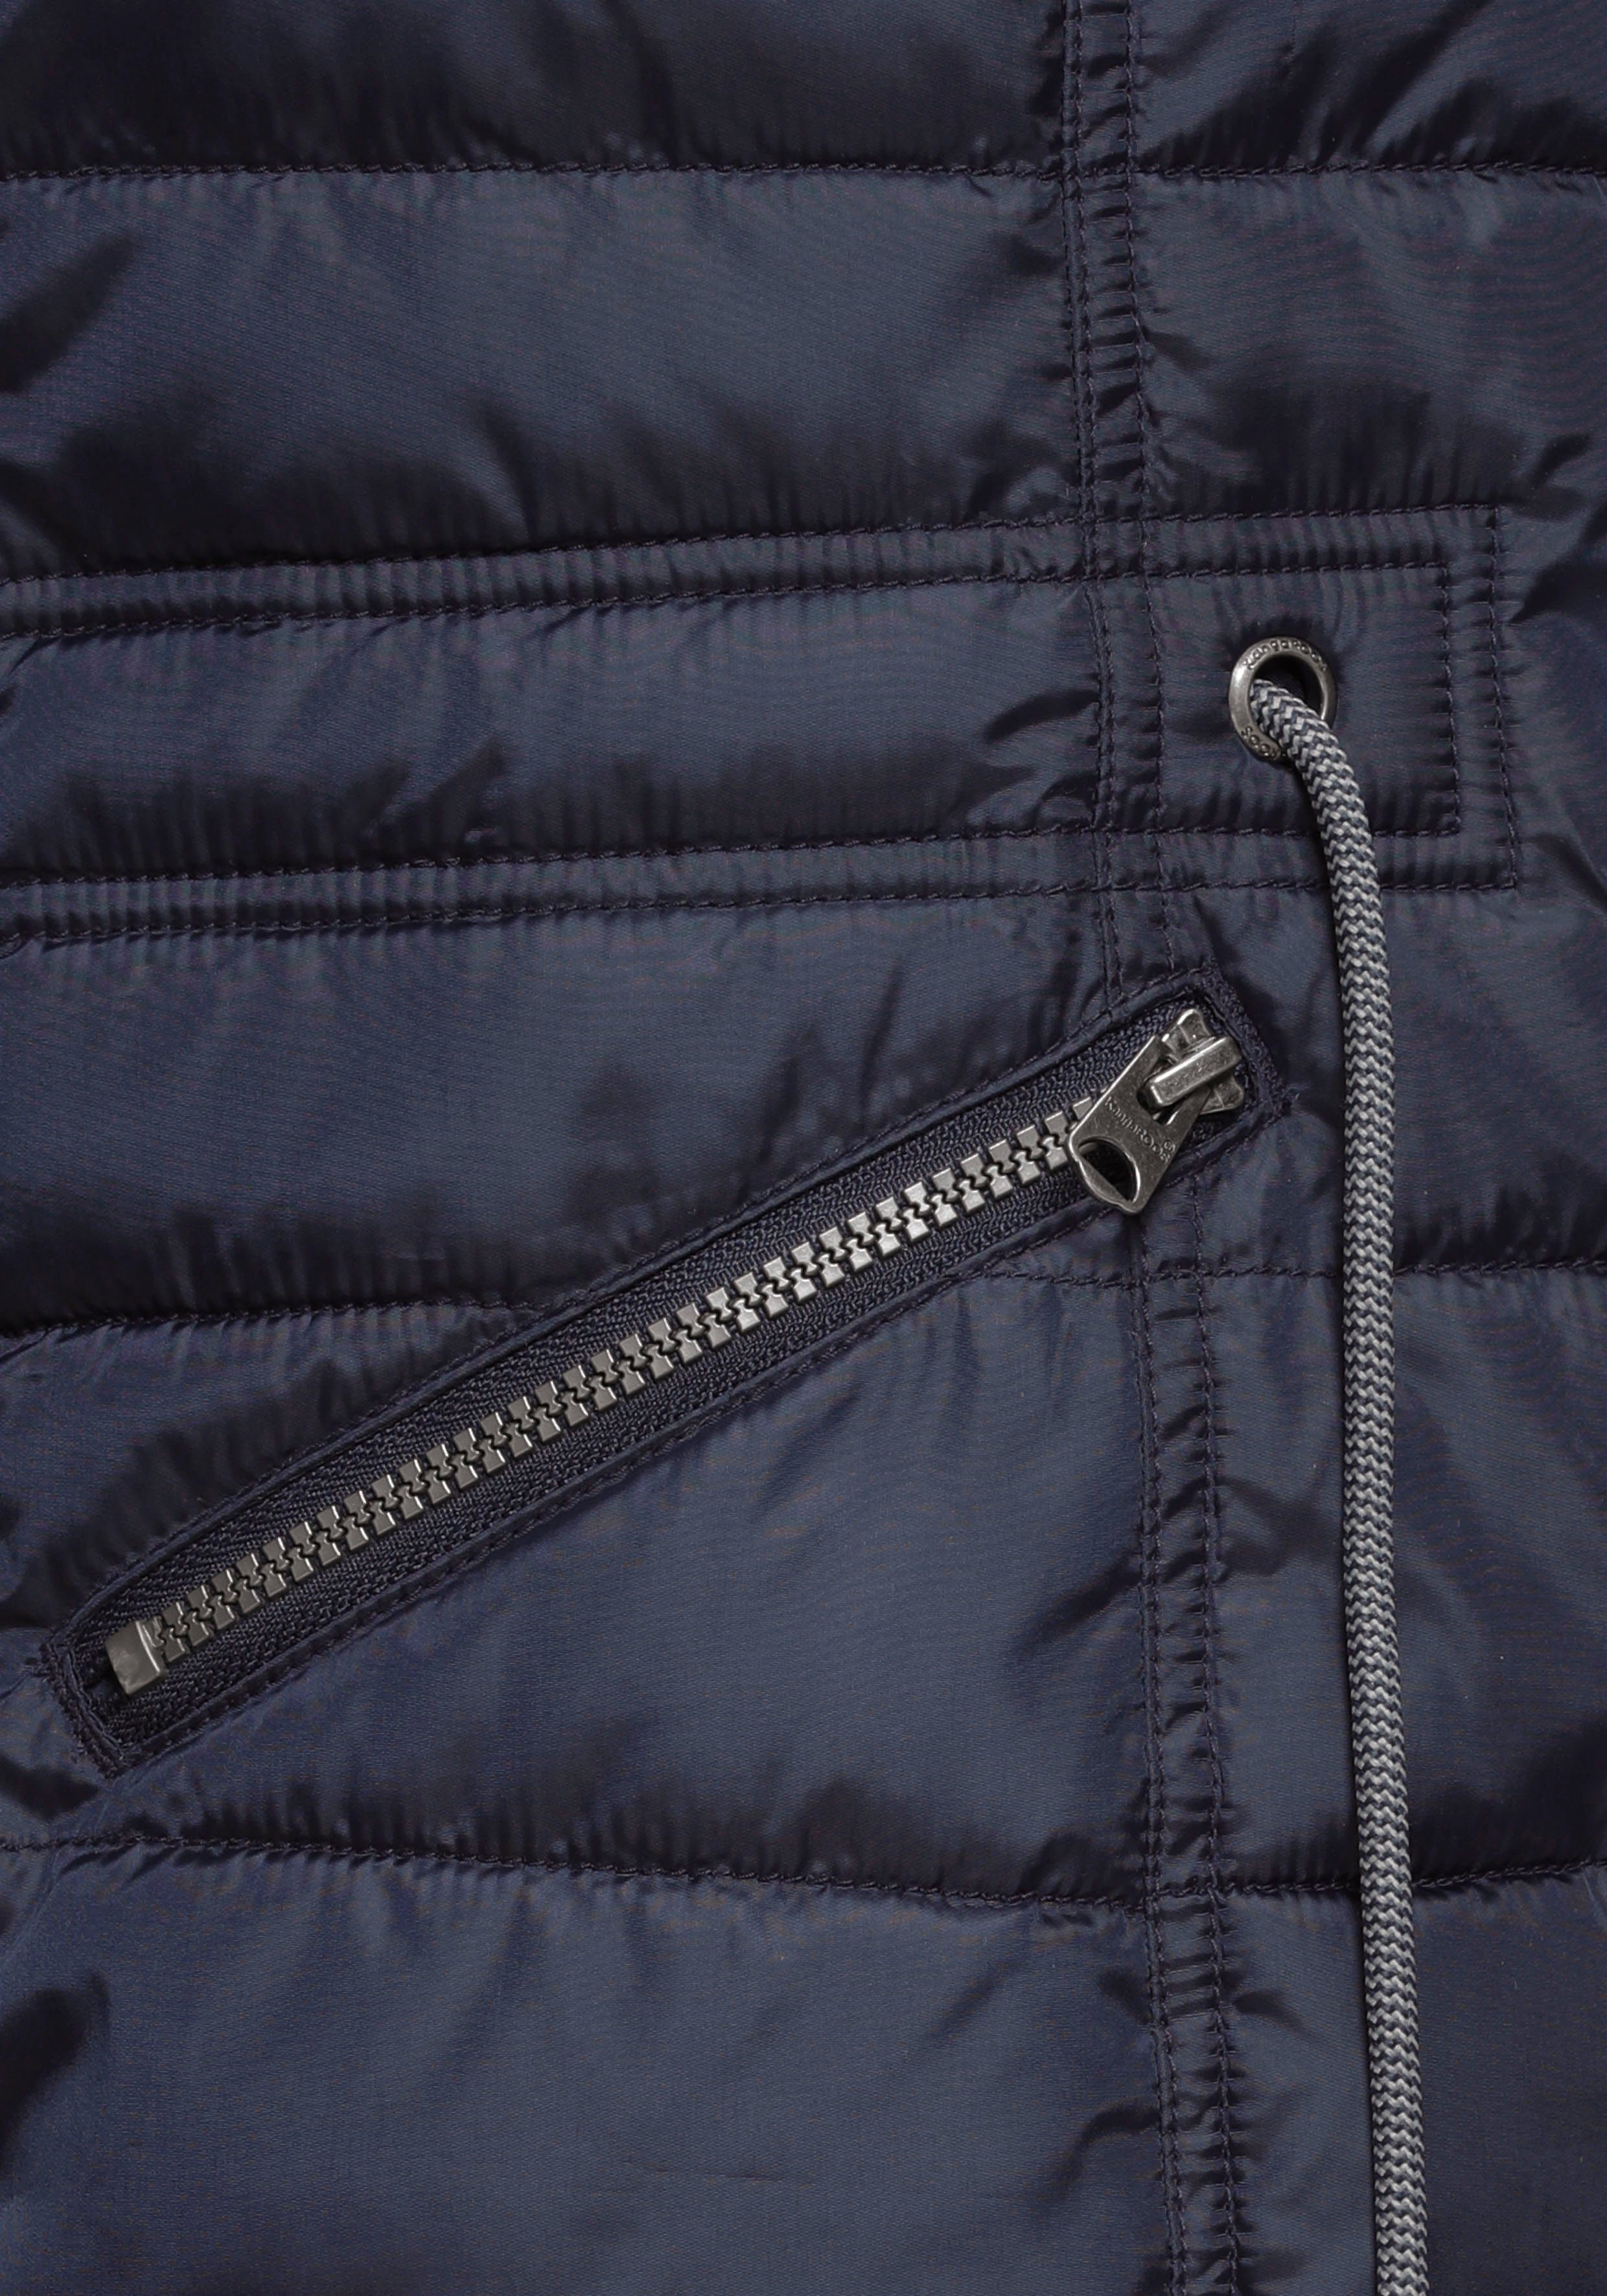 blau abnehmbarem Kapuze aus (Jacke Fellimitat-Kragen Material) an nachhaltigem der Steppjacke kuscheligem, KangaROOS mit